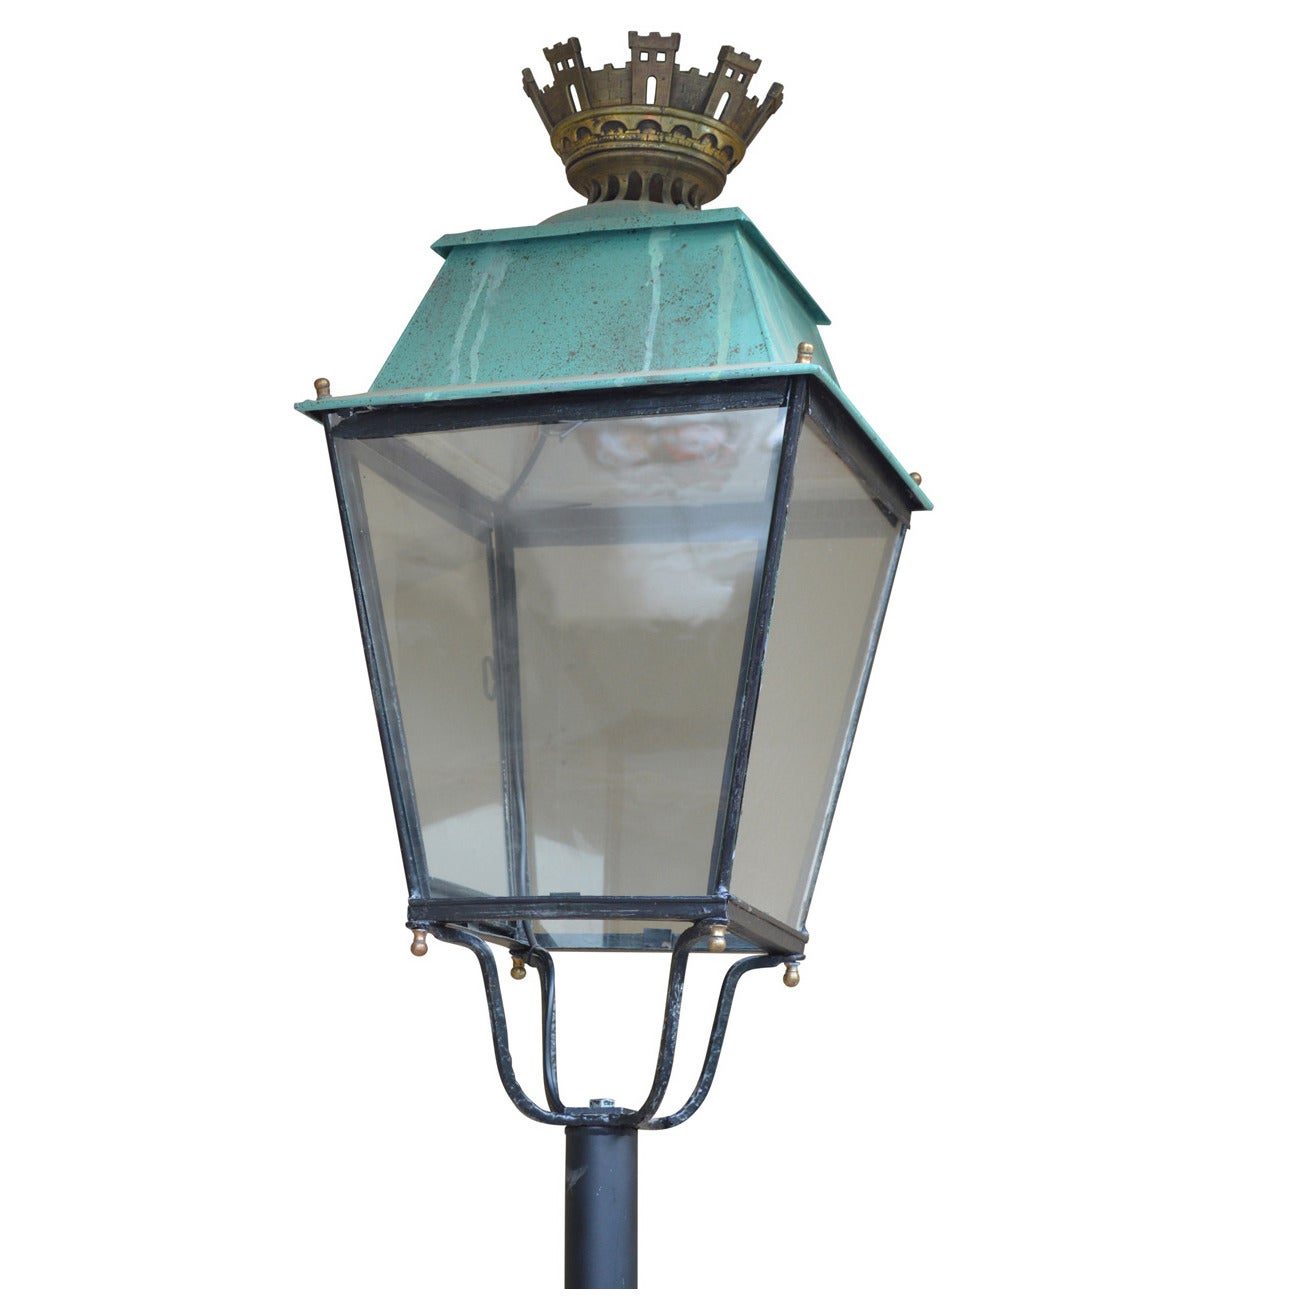 Authentic Copenhagen Street Lantern